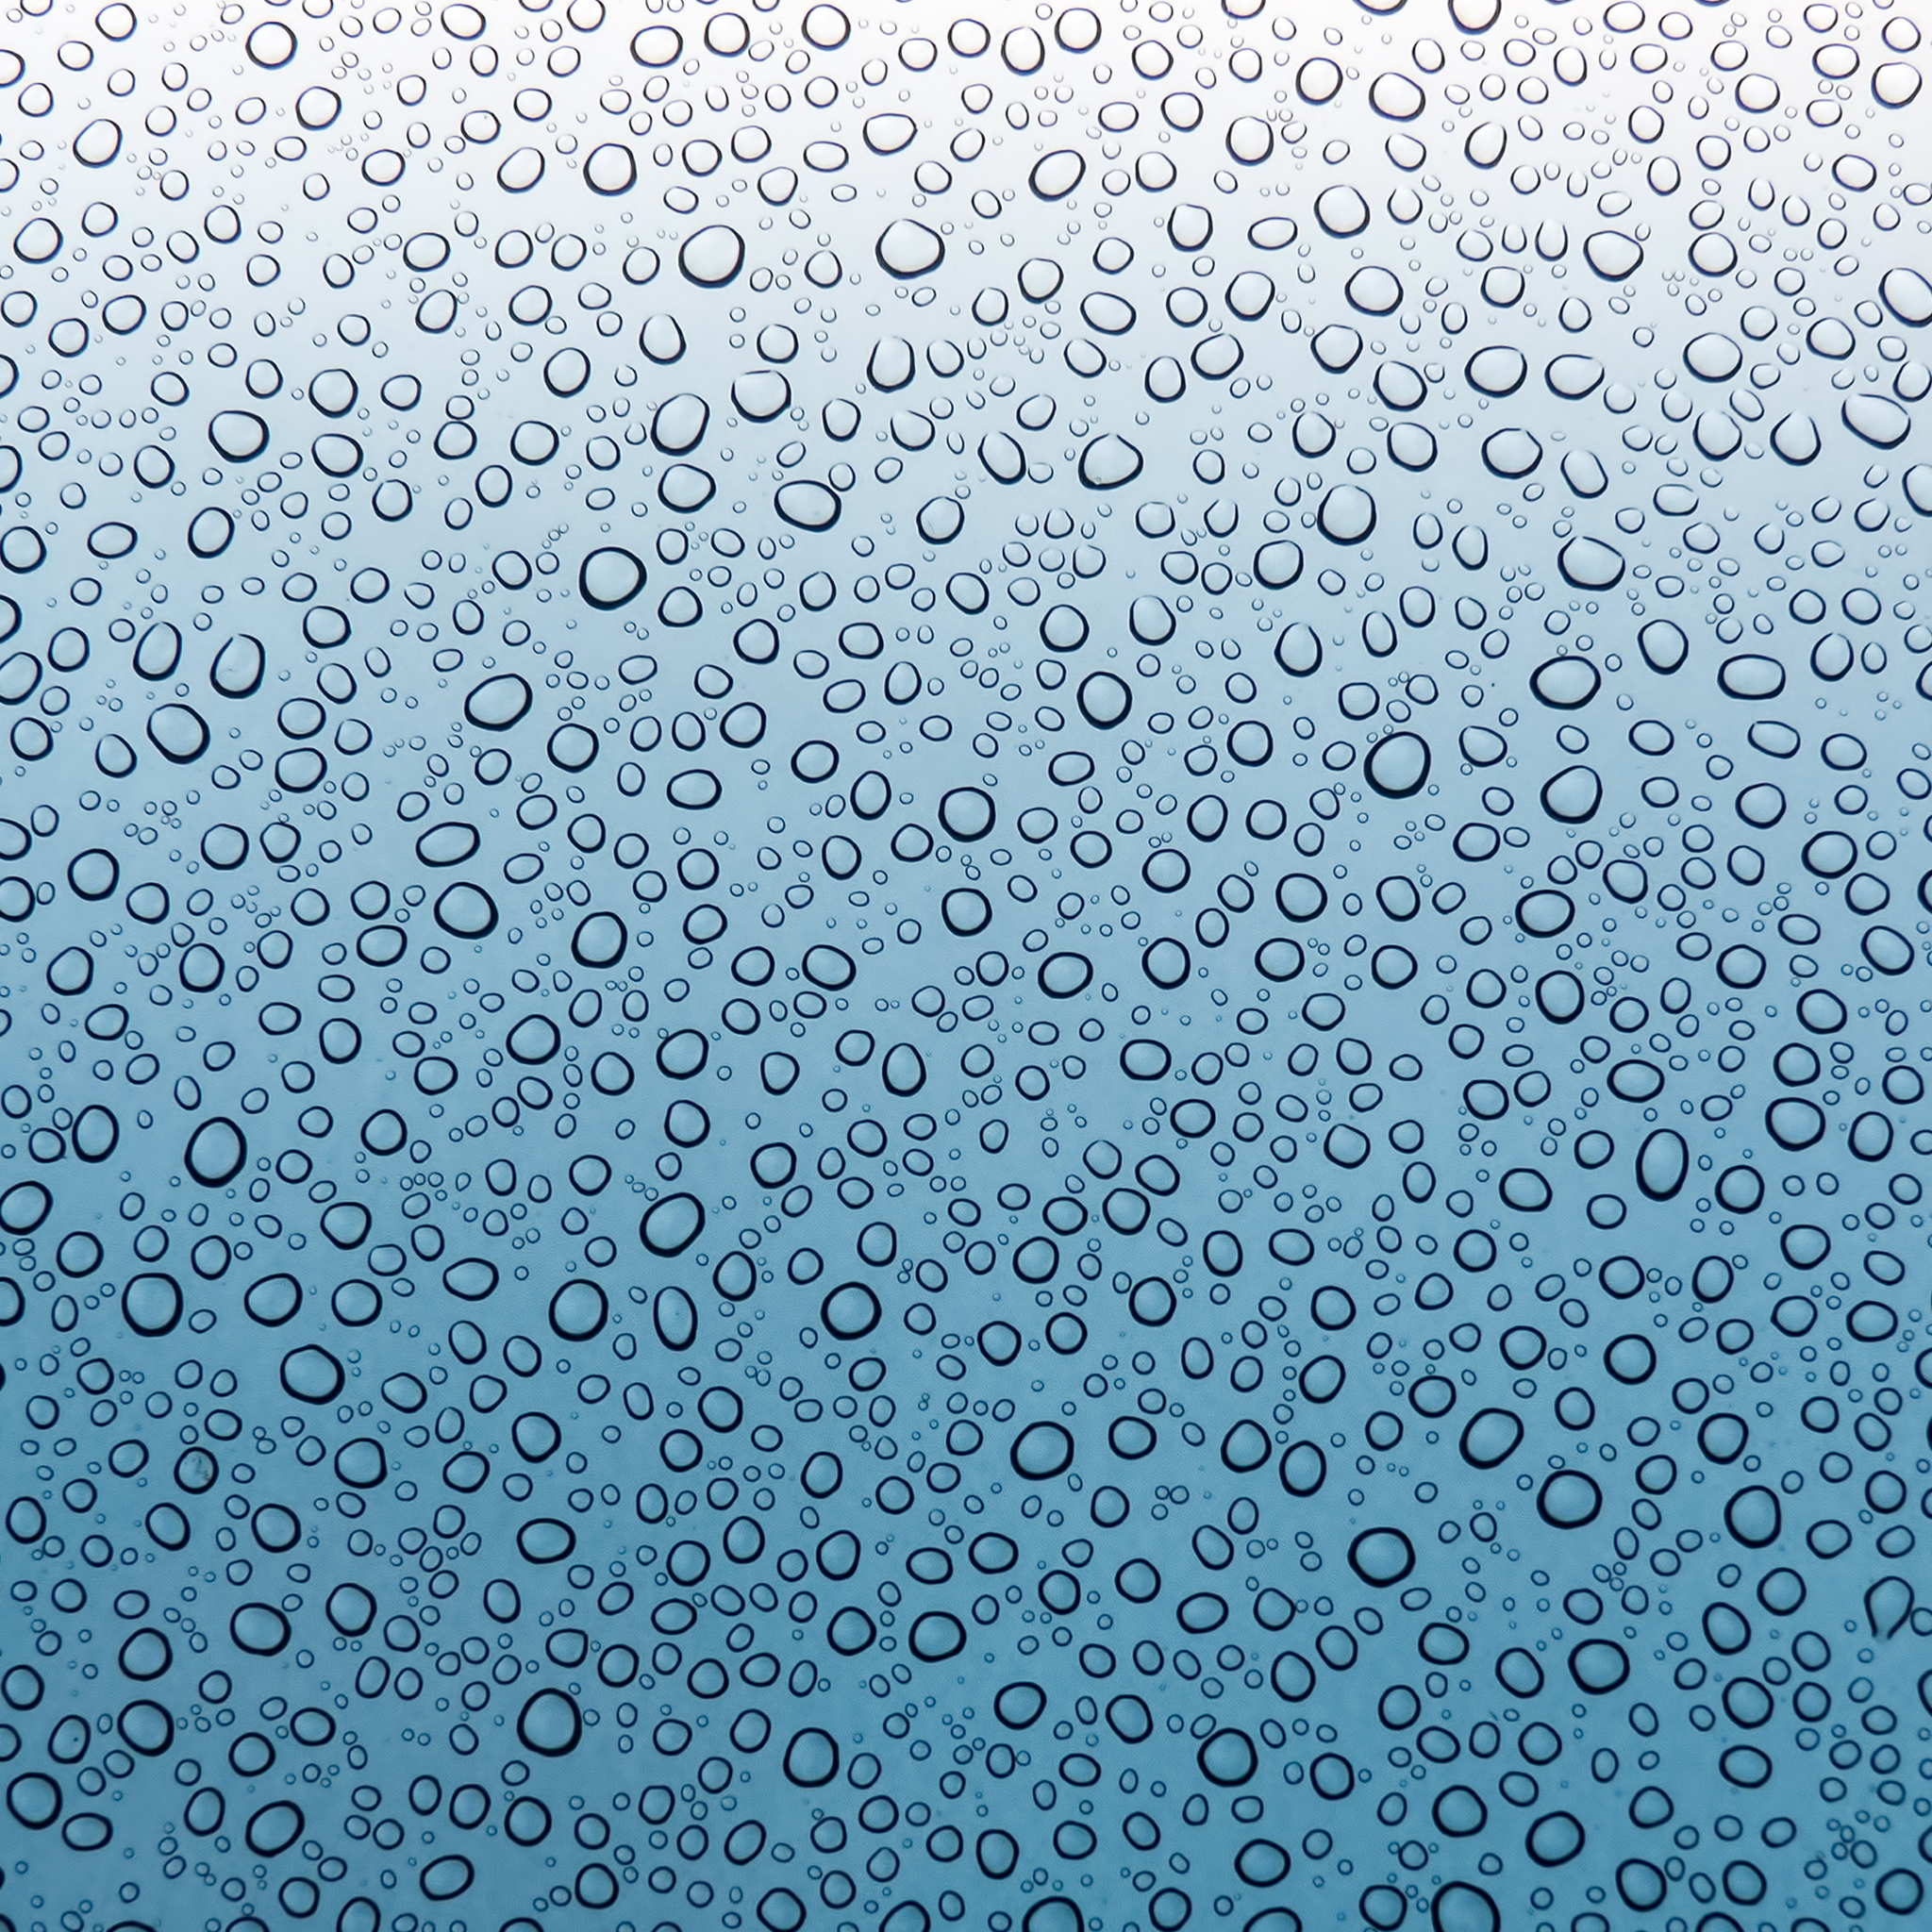 Water Drops iPad Air Wallpaper iPhone